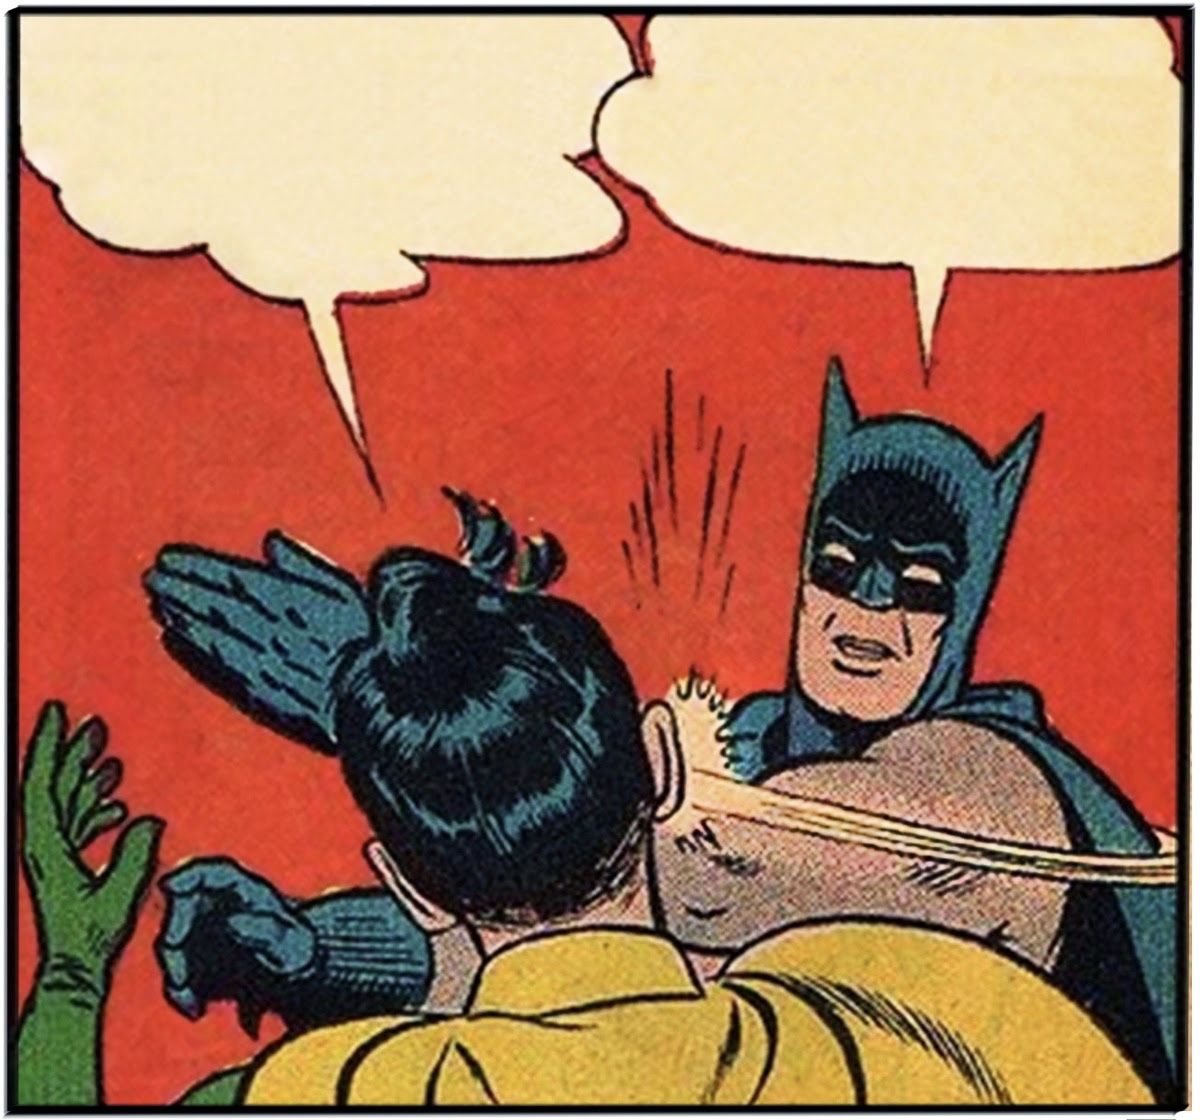 Batman Slapping Robin Blank Meme Template